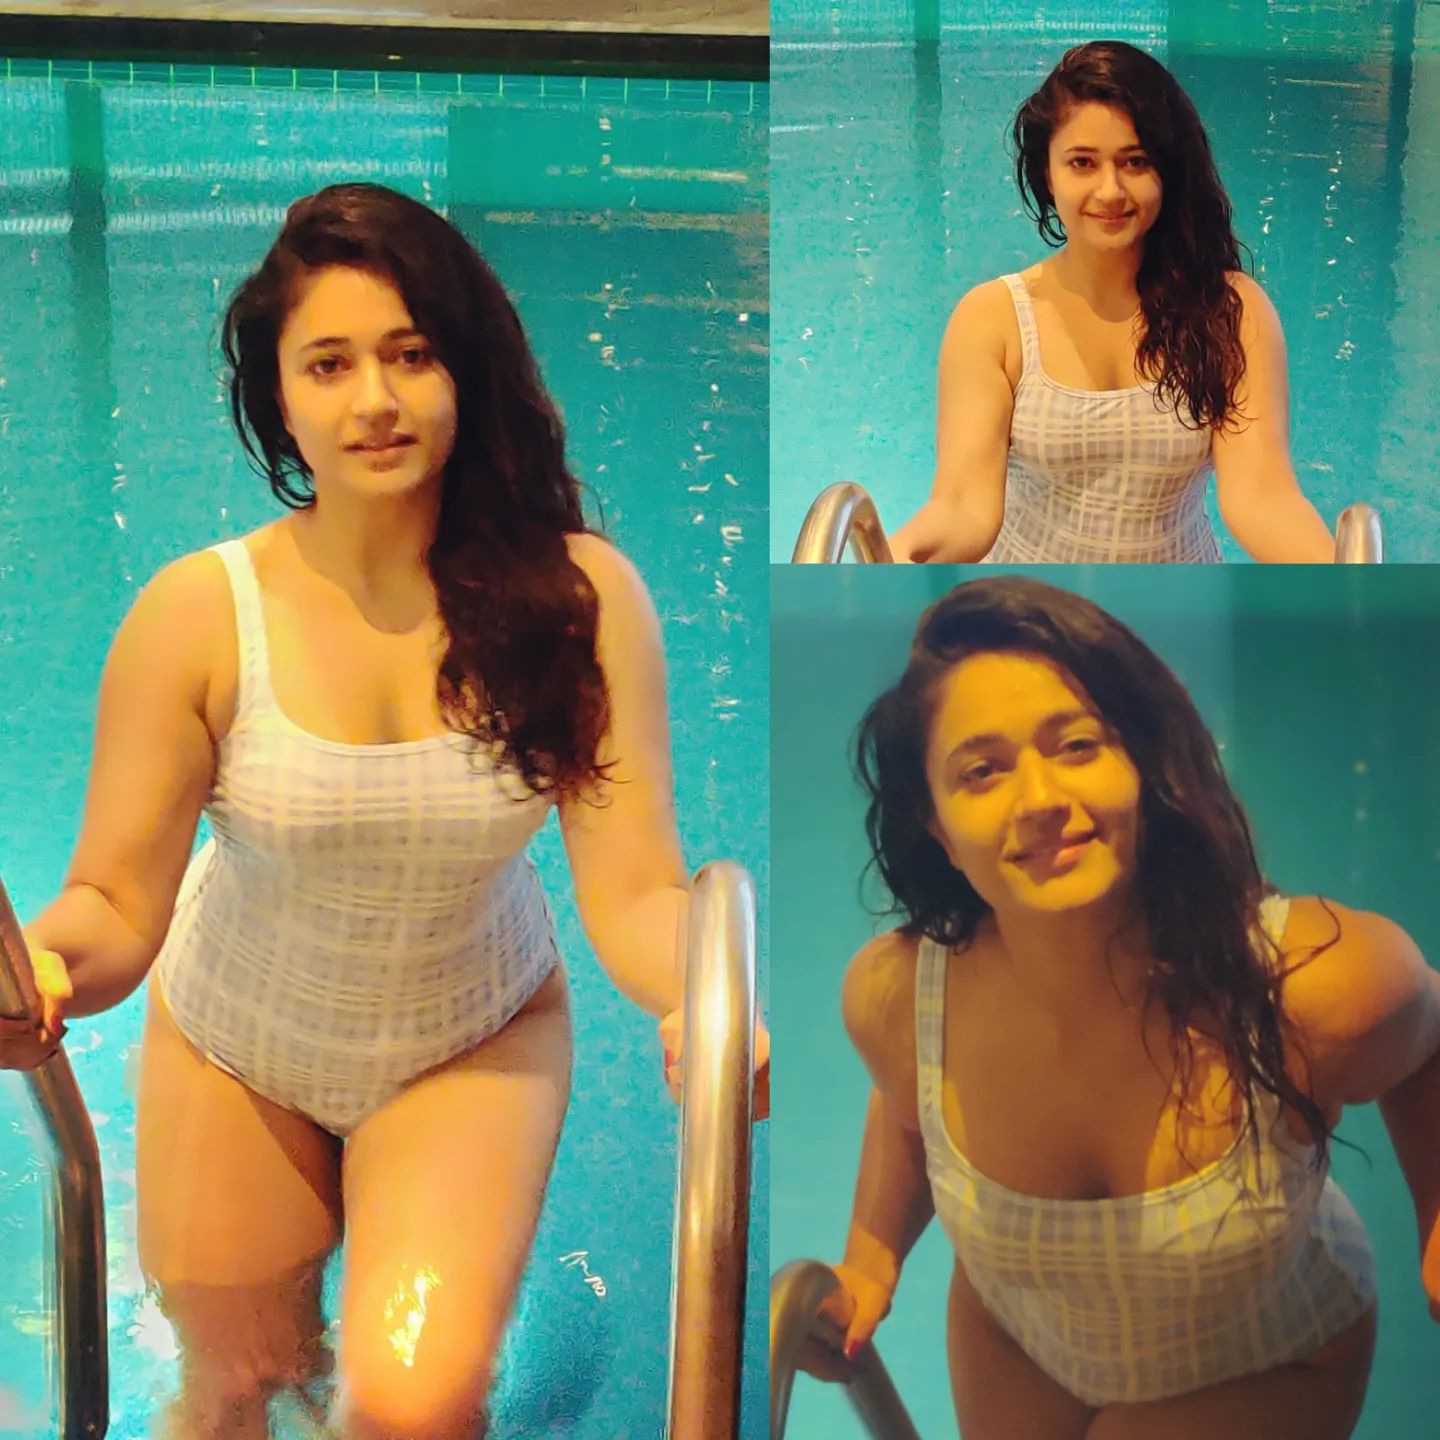 Poonam bajwa hot posing in bikini goes viral on internet